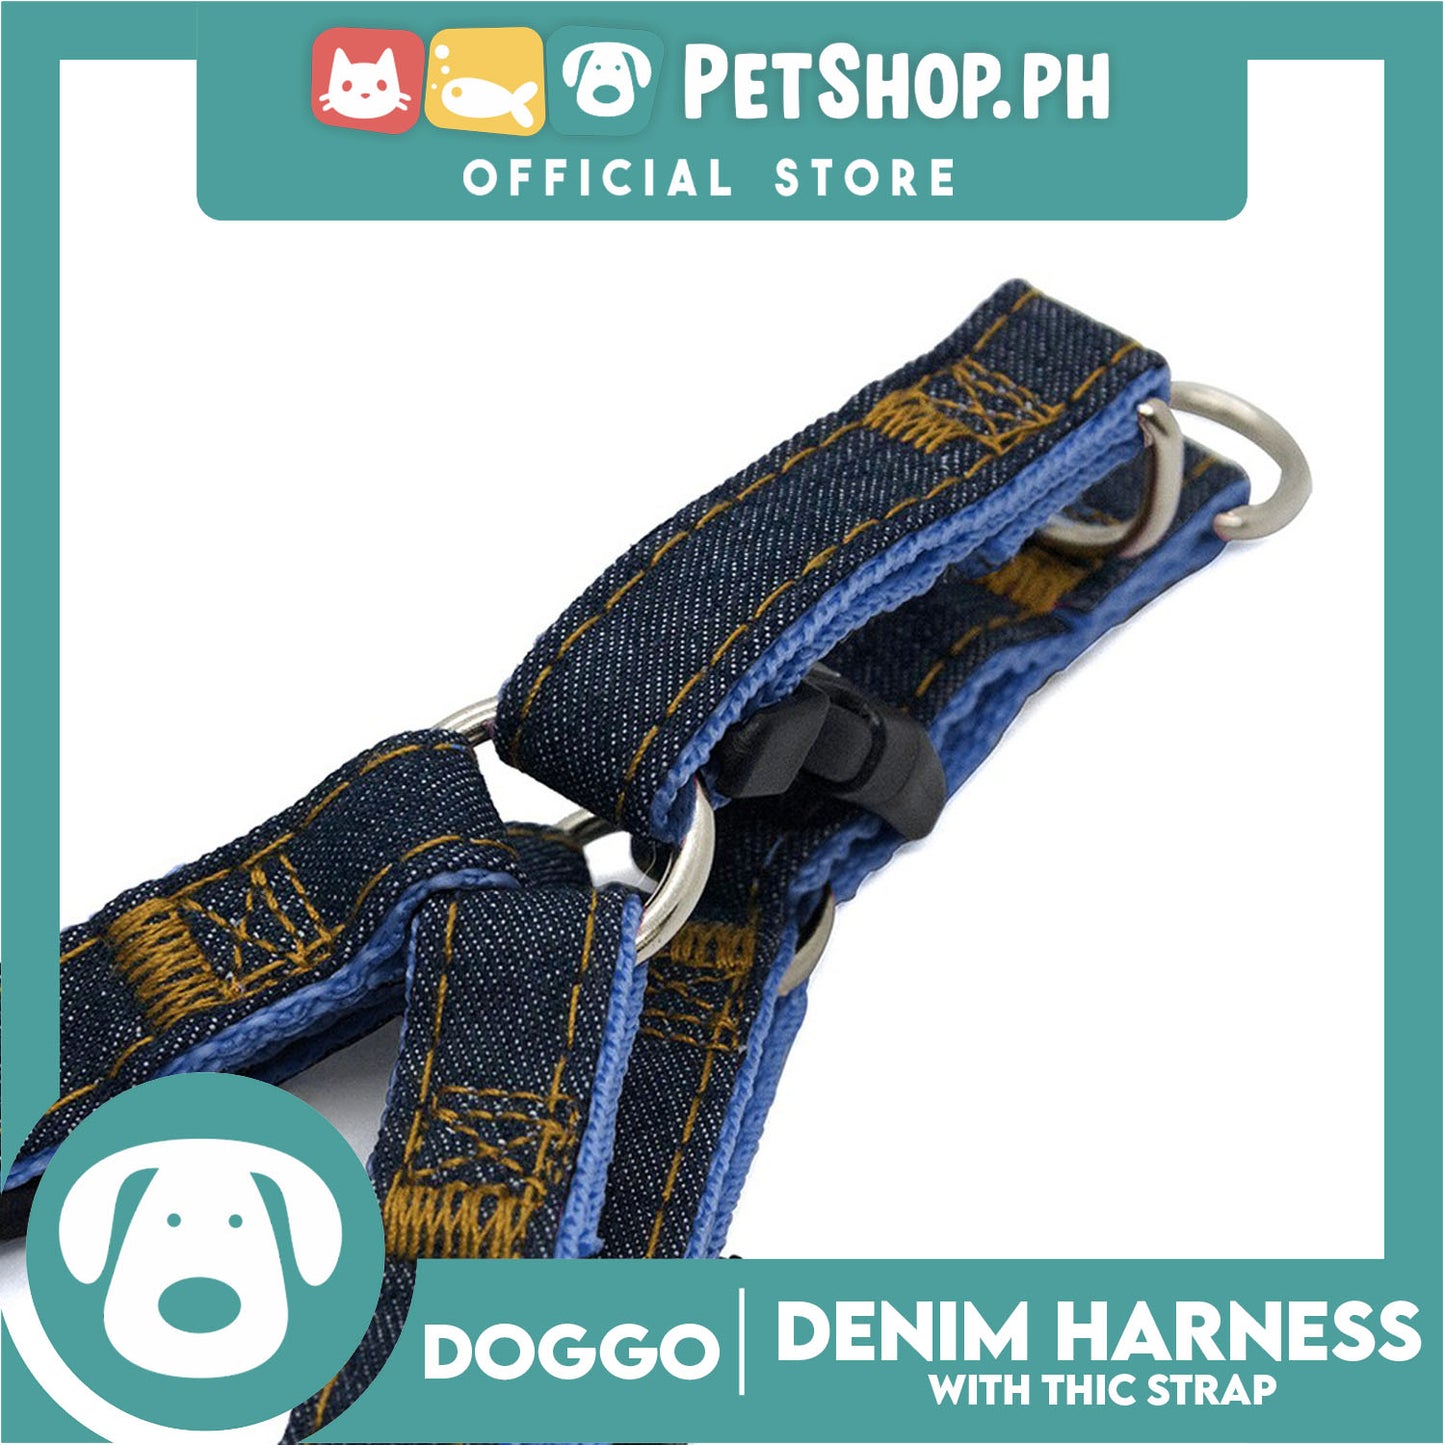 Doggo Denim Harness Medium Size (Red) Harness for Dog